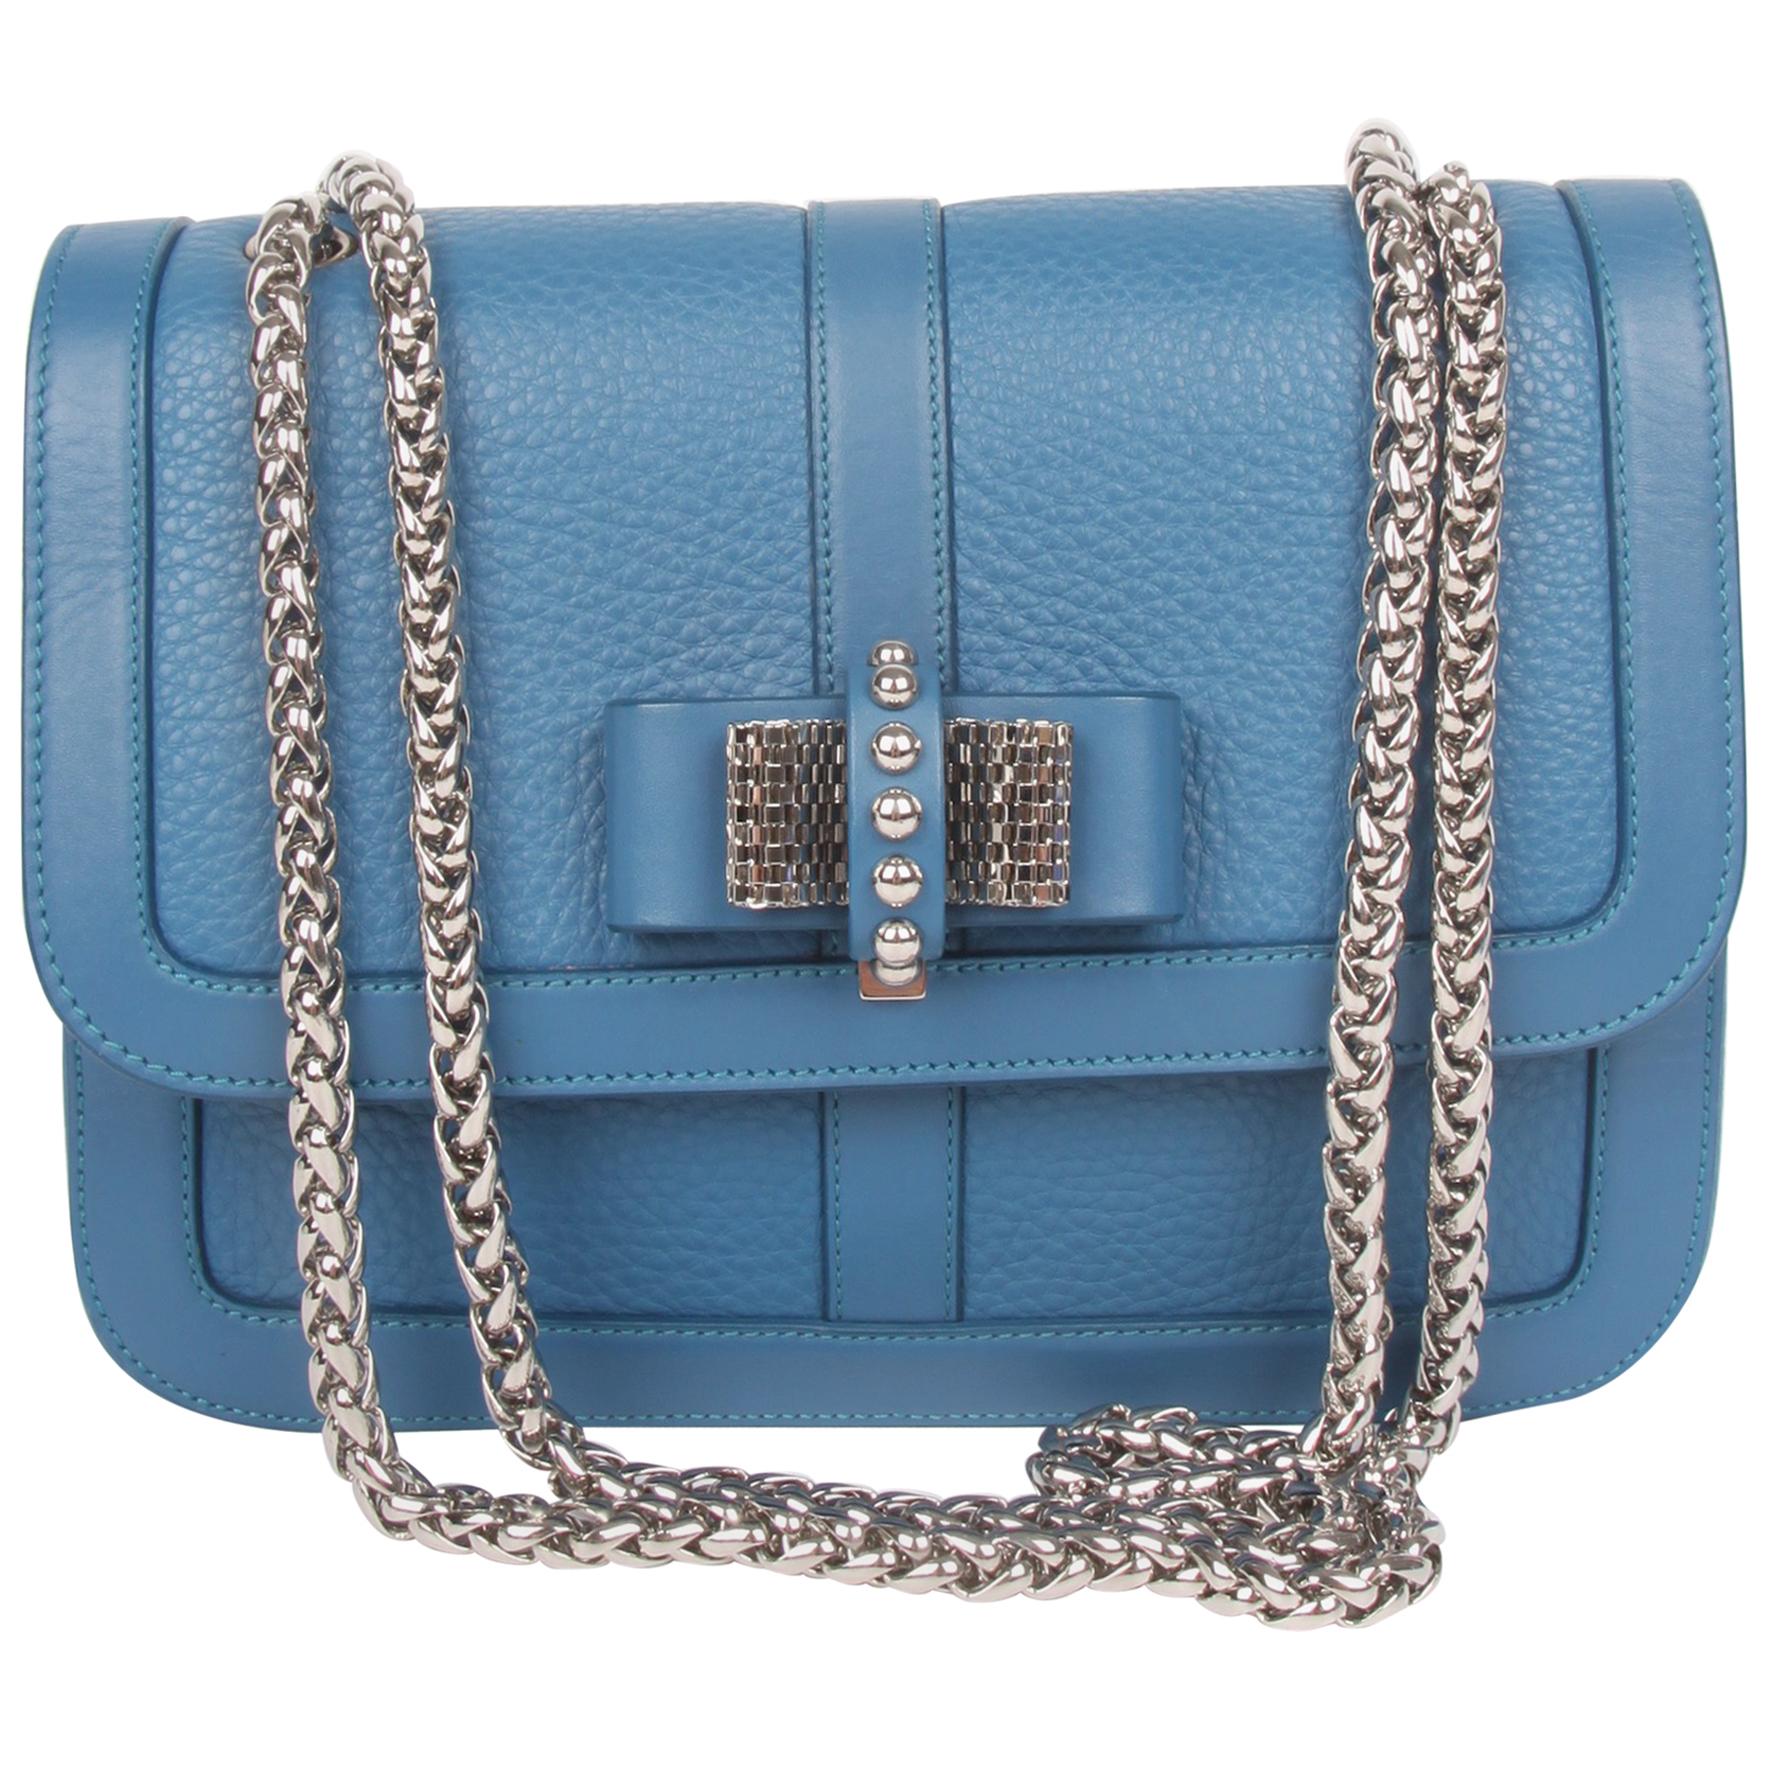 Louboutin Sweet Charity Bag - blue